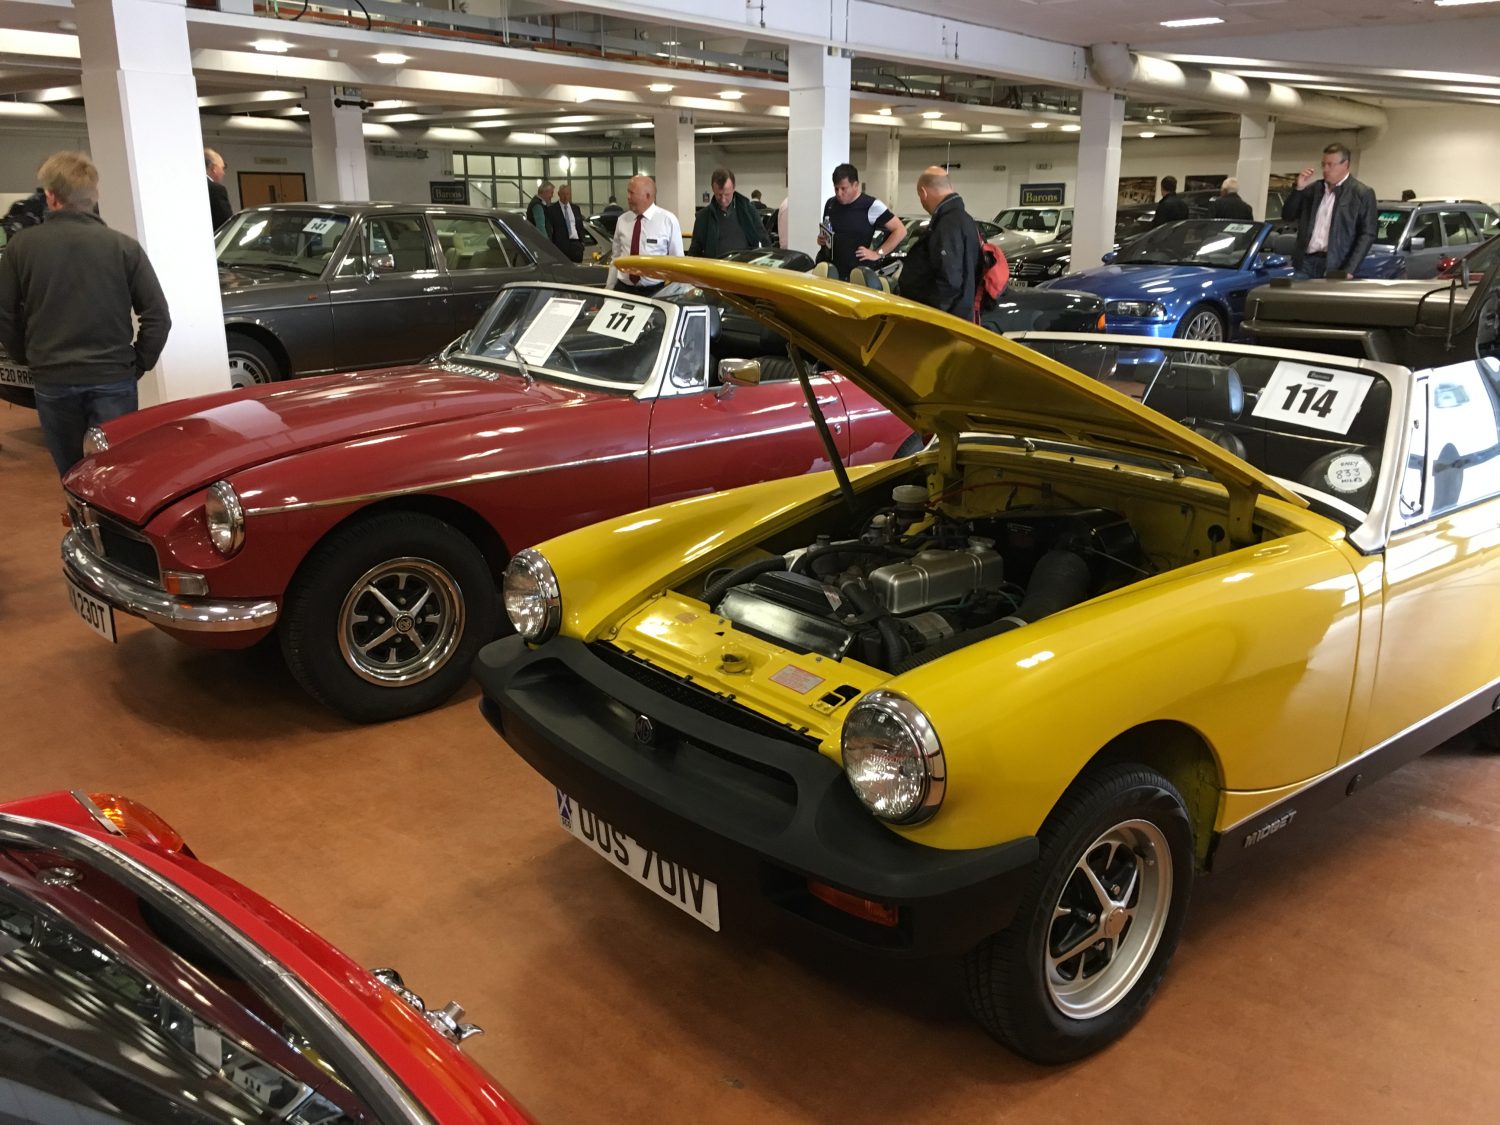 050618 British Heritage, Classic and Sports Cars 05 Jun 2018 (9 ...